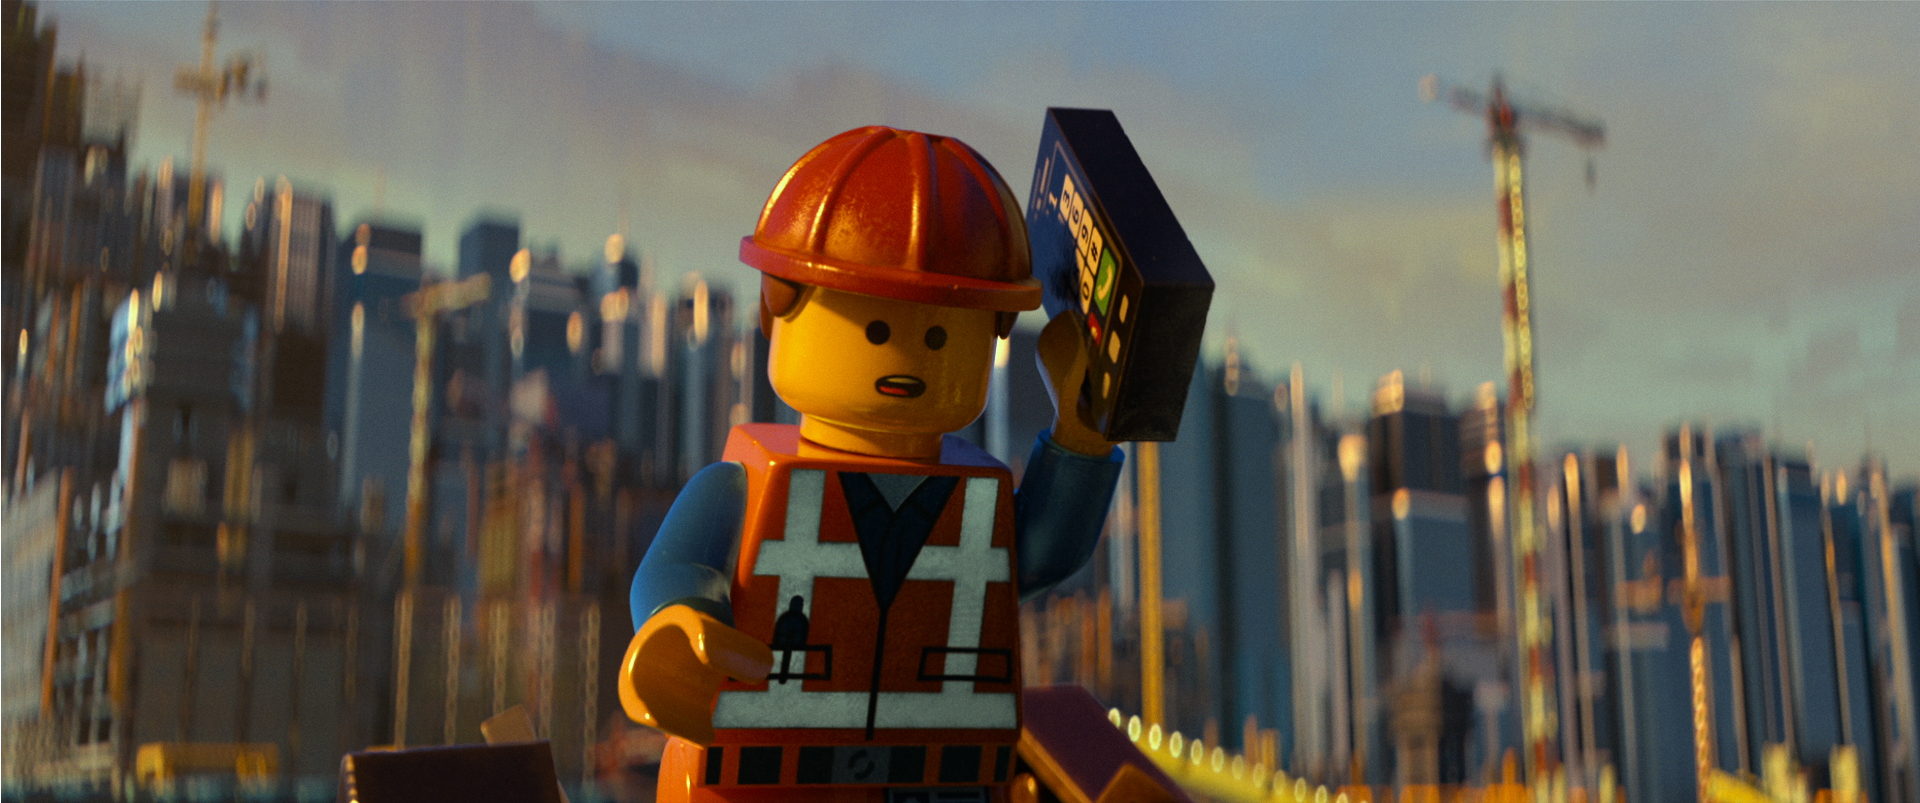 Emmet (voiced by Chris Pratt) in "The Lego Movie."